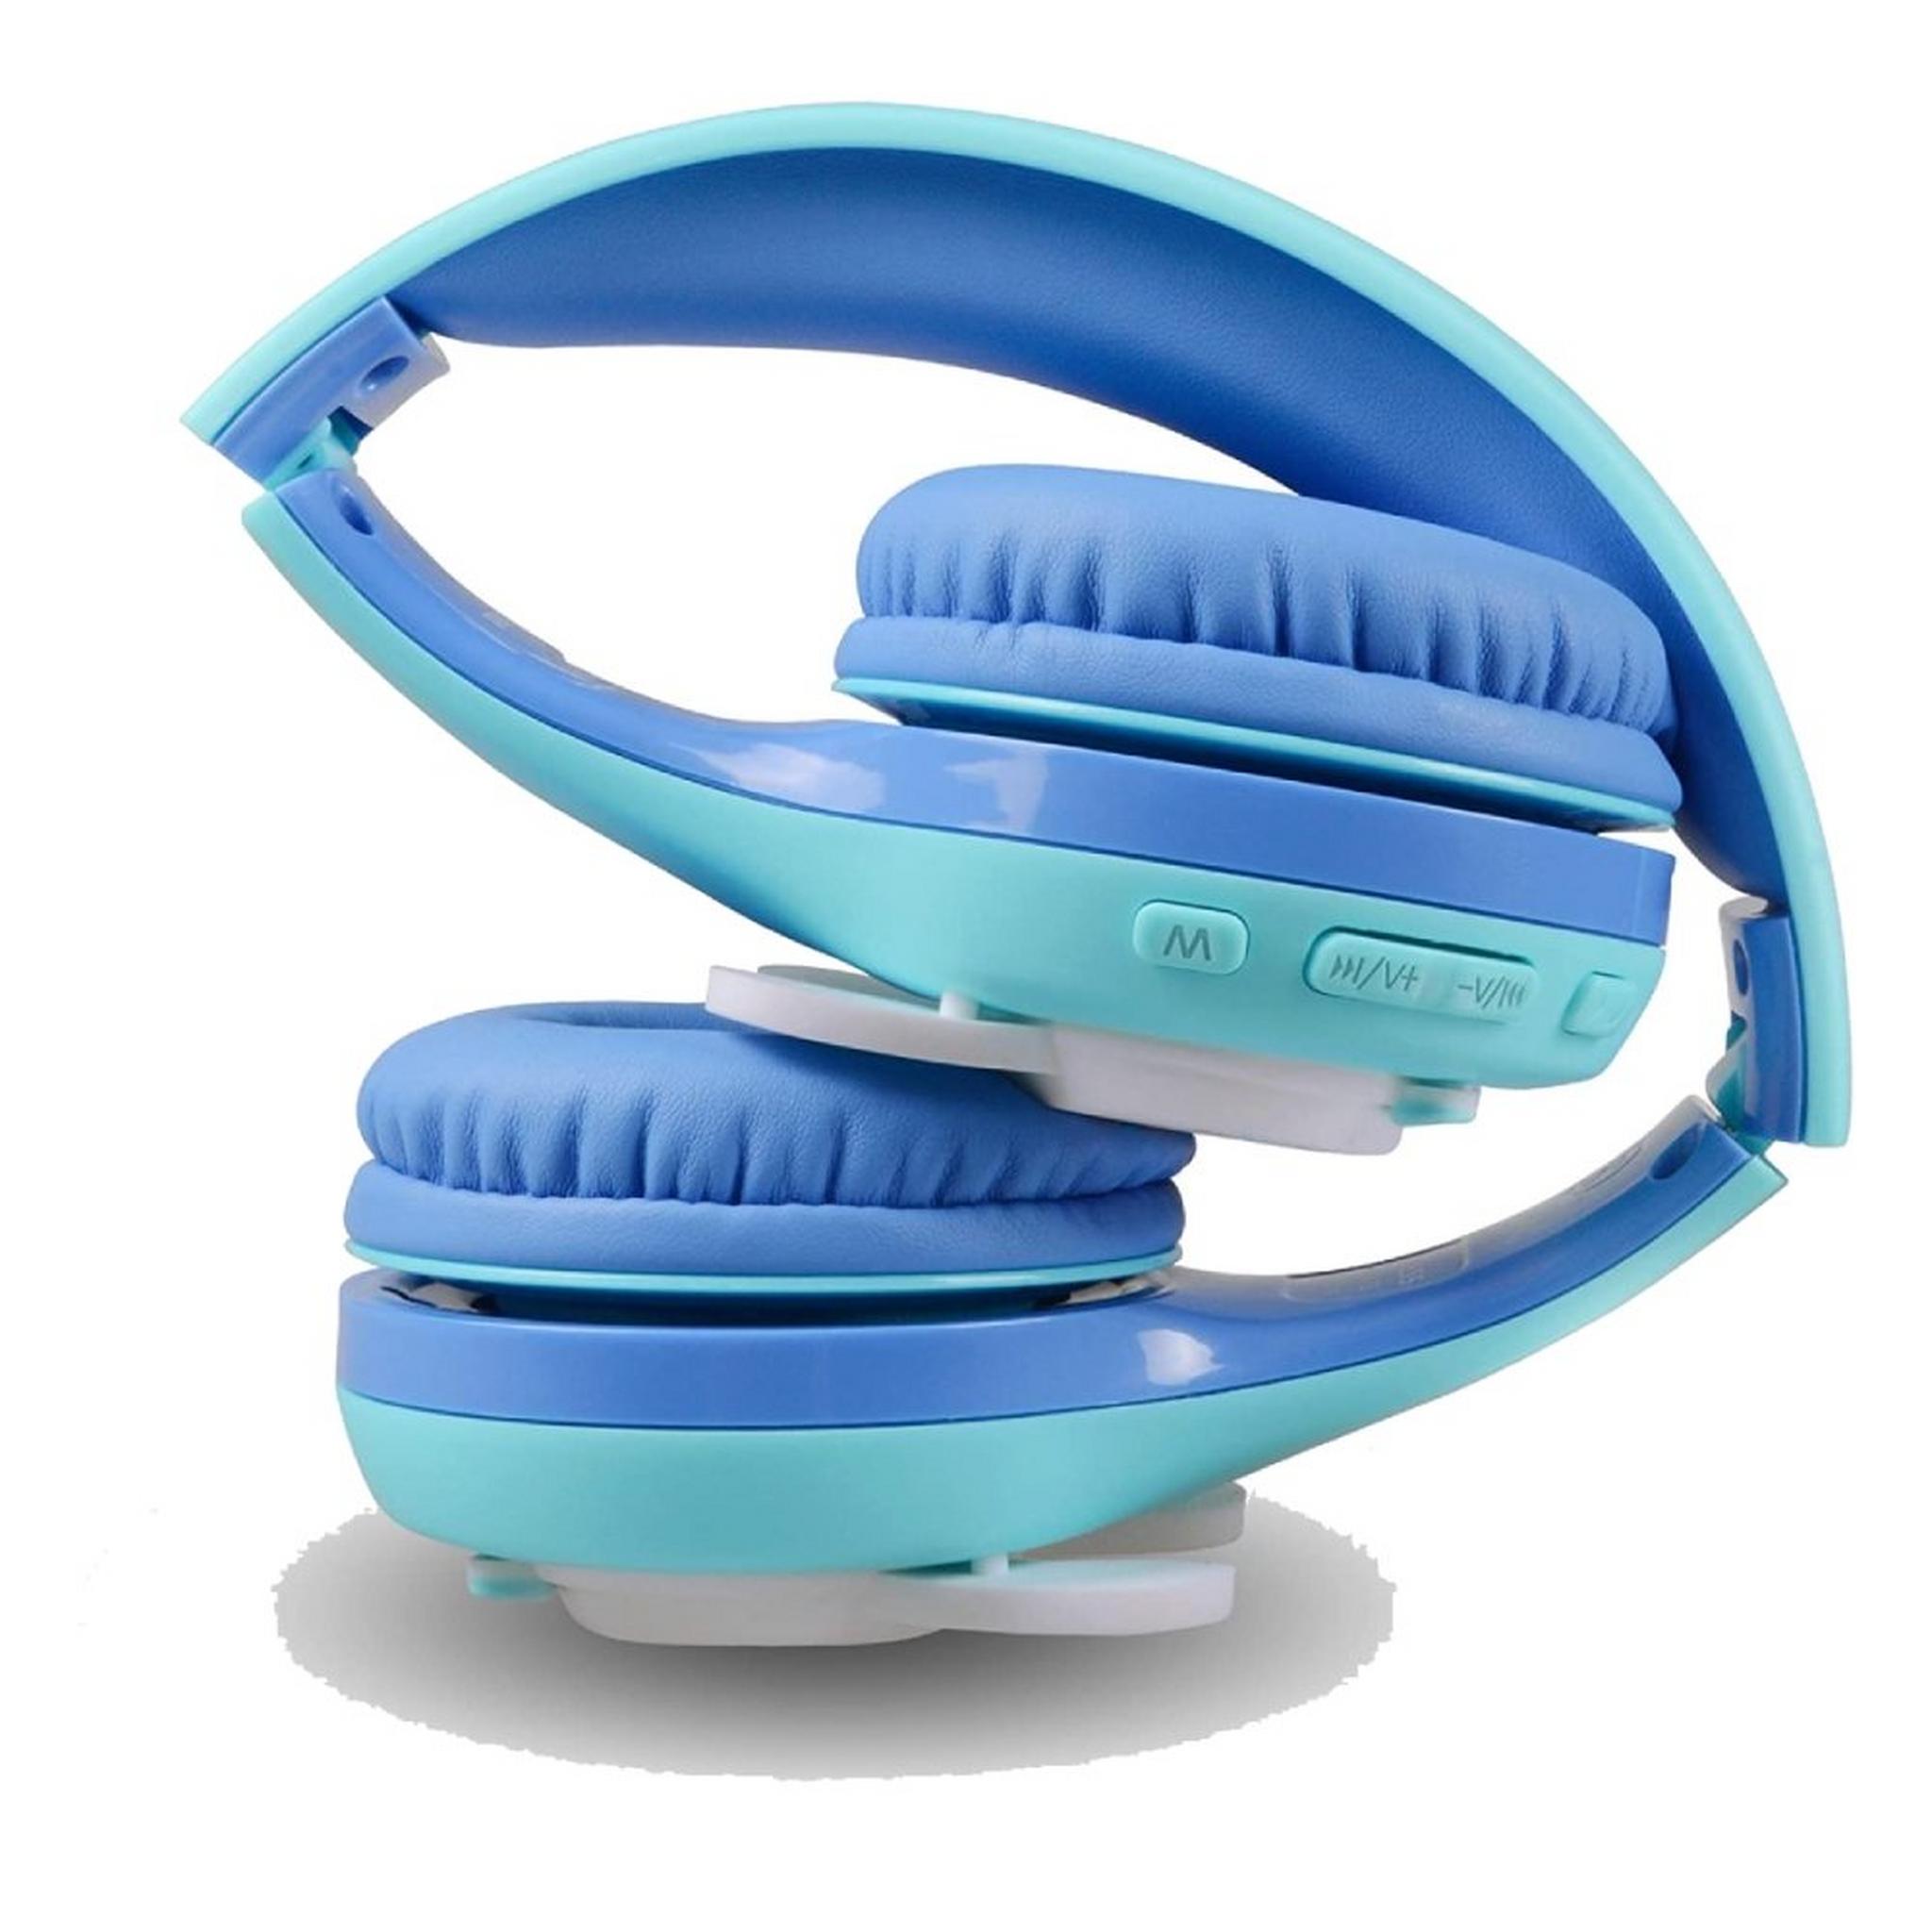 Riwbox Kids Bluetooth Rabbit Headphones - Blue/Green